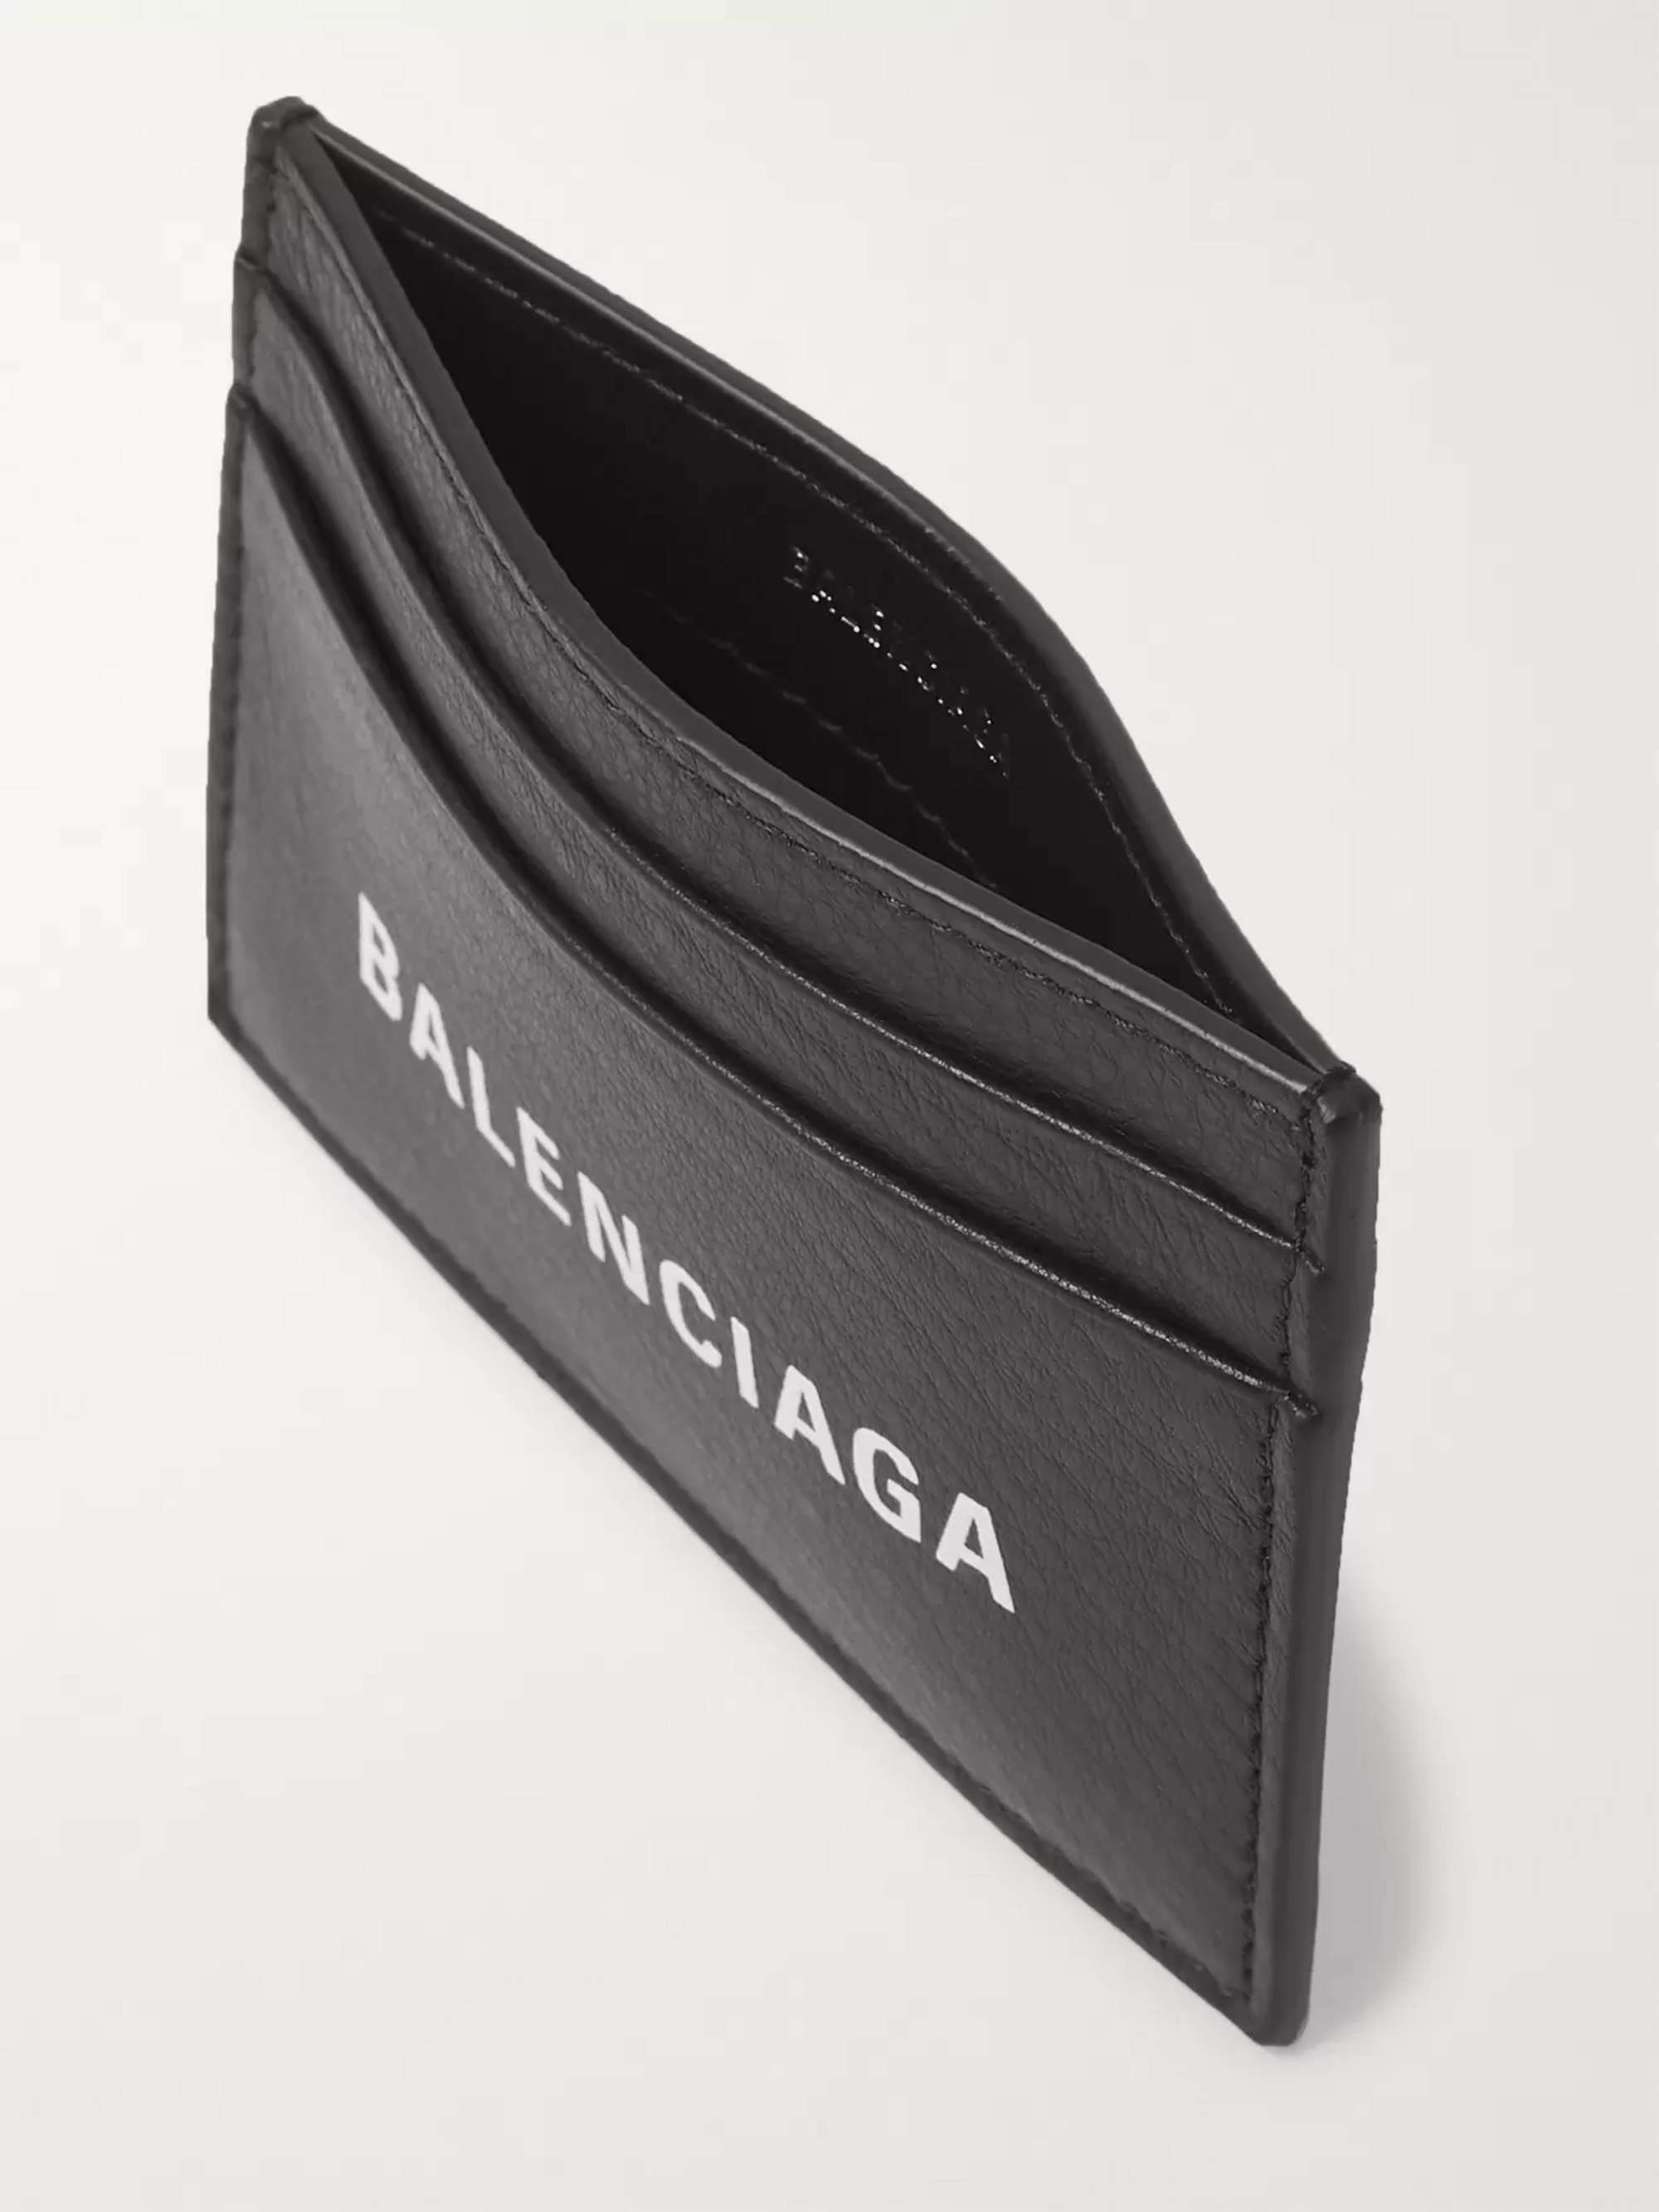 BALENCIAGA Logo-Print Full-Grain Leather Cardholder